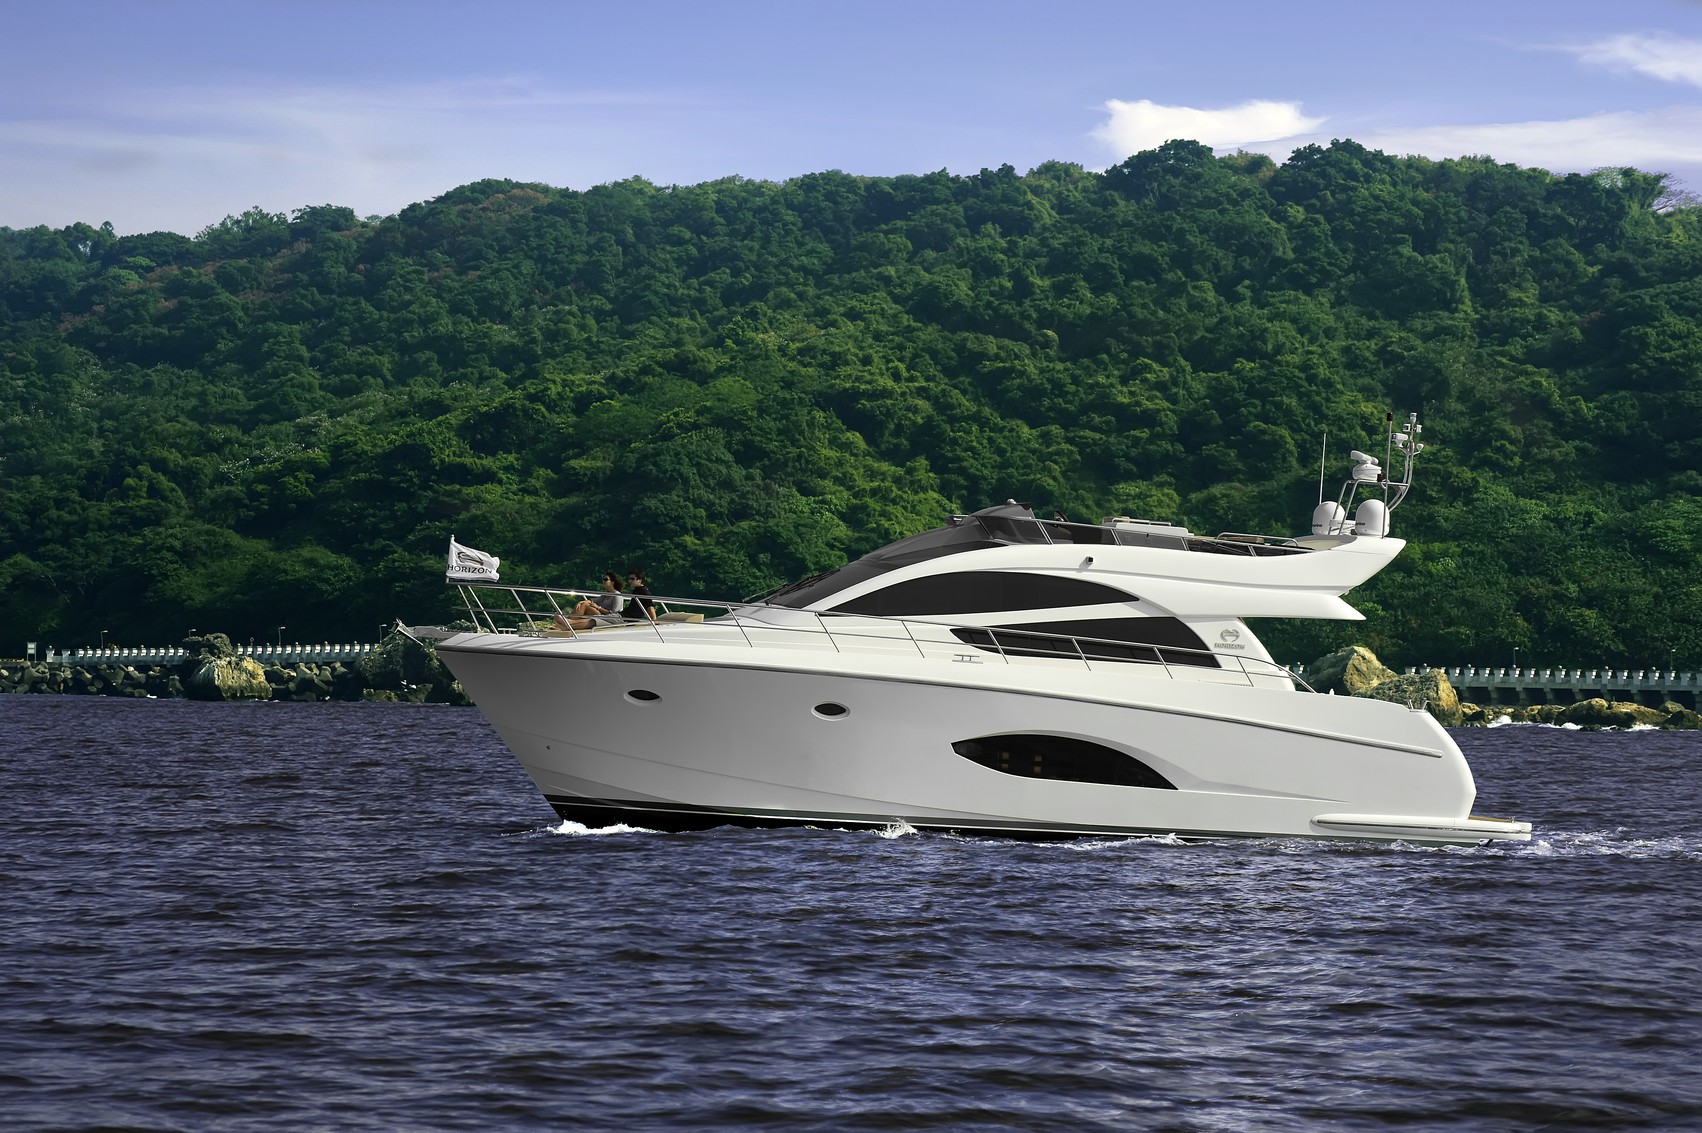 http://www.charterworld.com/news/wp-content/uploads/2011/12/Newly-launched-luxury-yacht-Horizon-E54.jpg